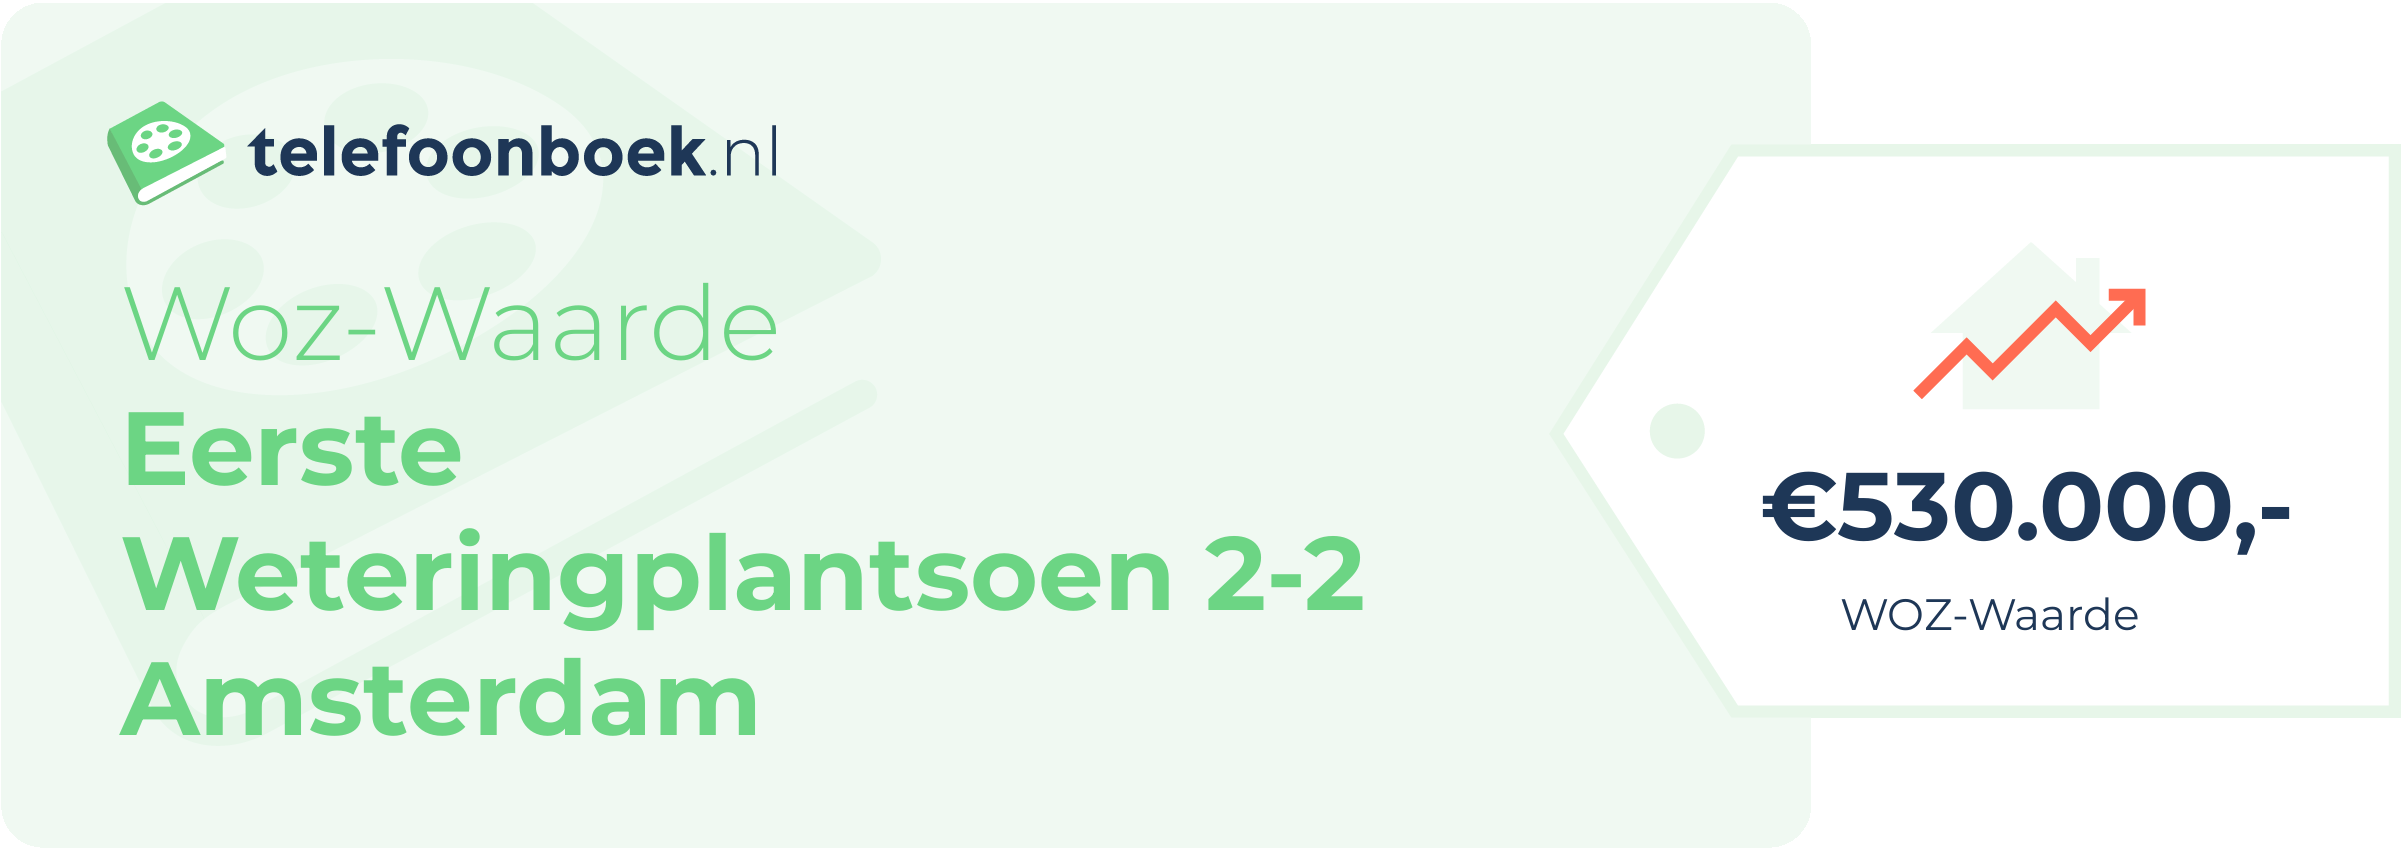 WOZ-waarde Eerste Weteringplantsoen 2-2 Amsterdam